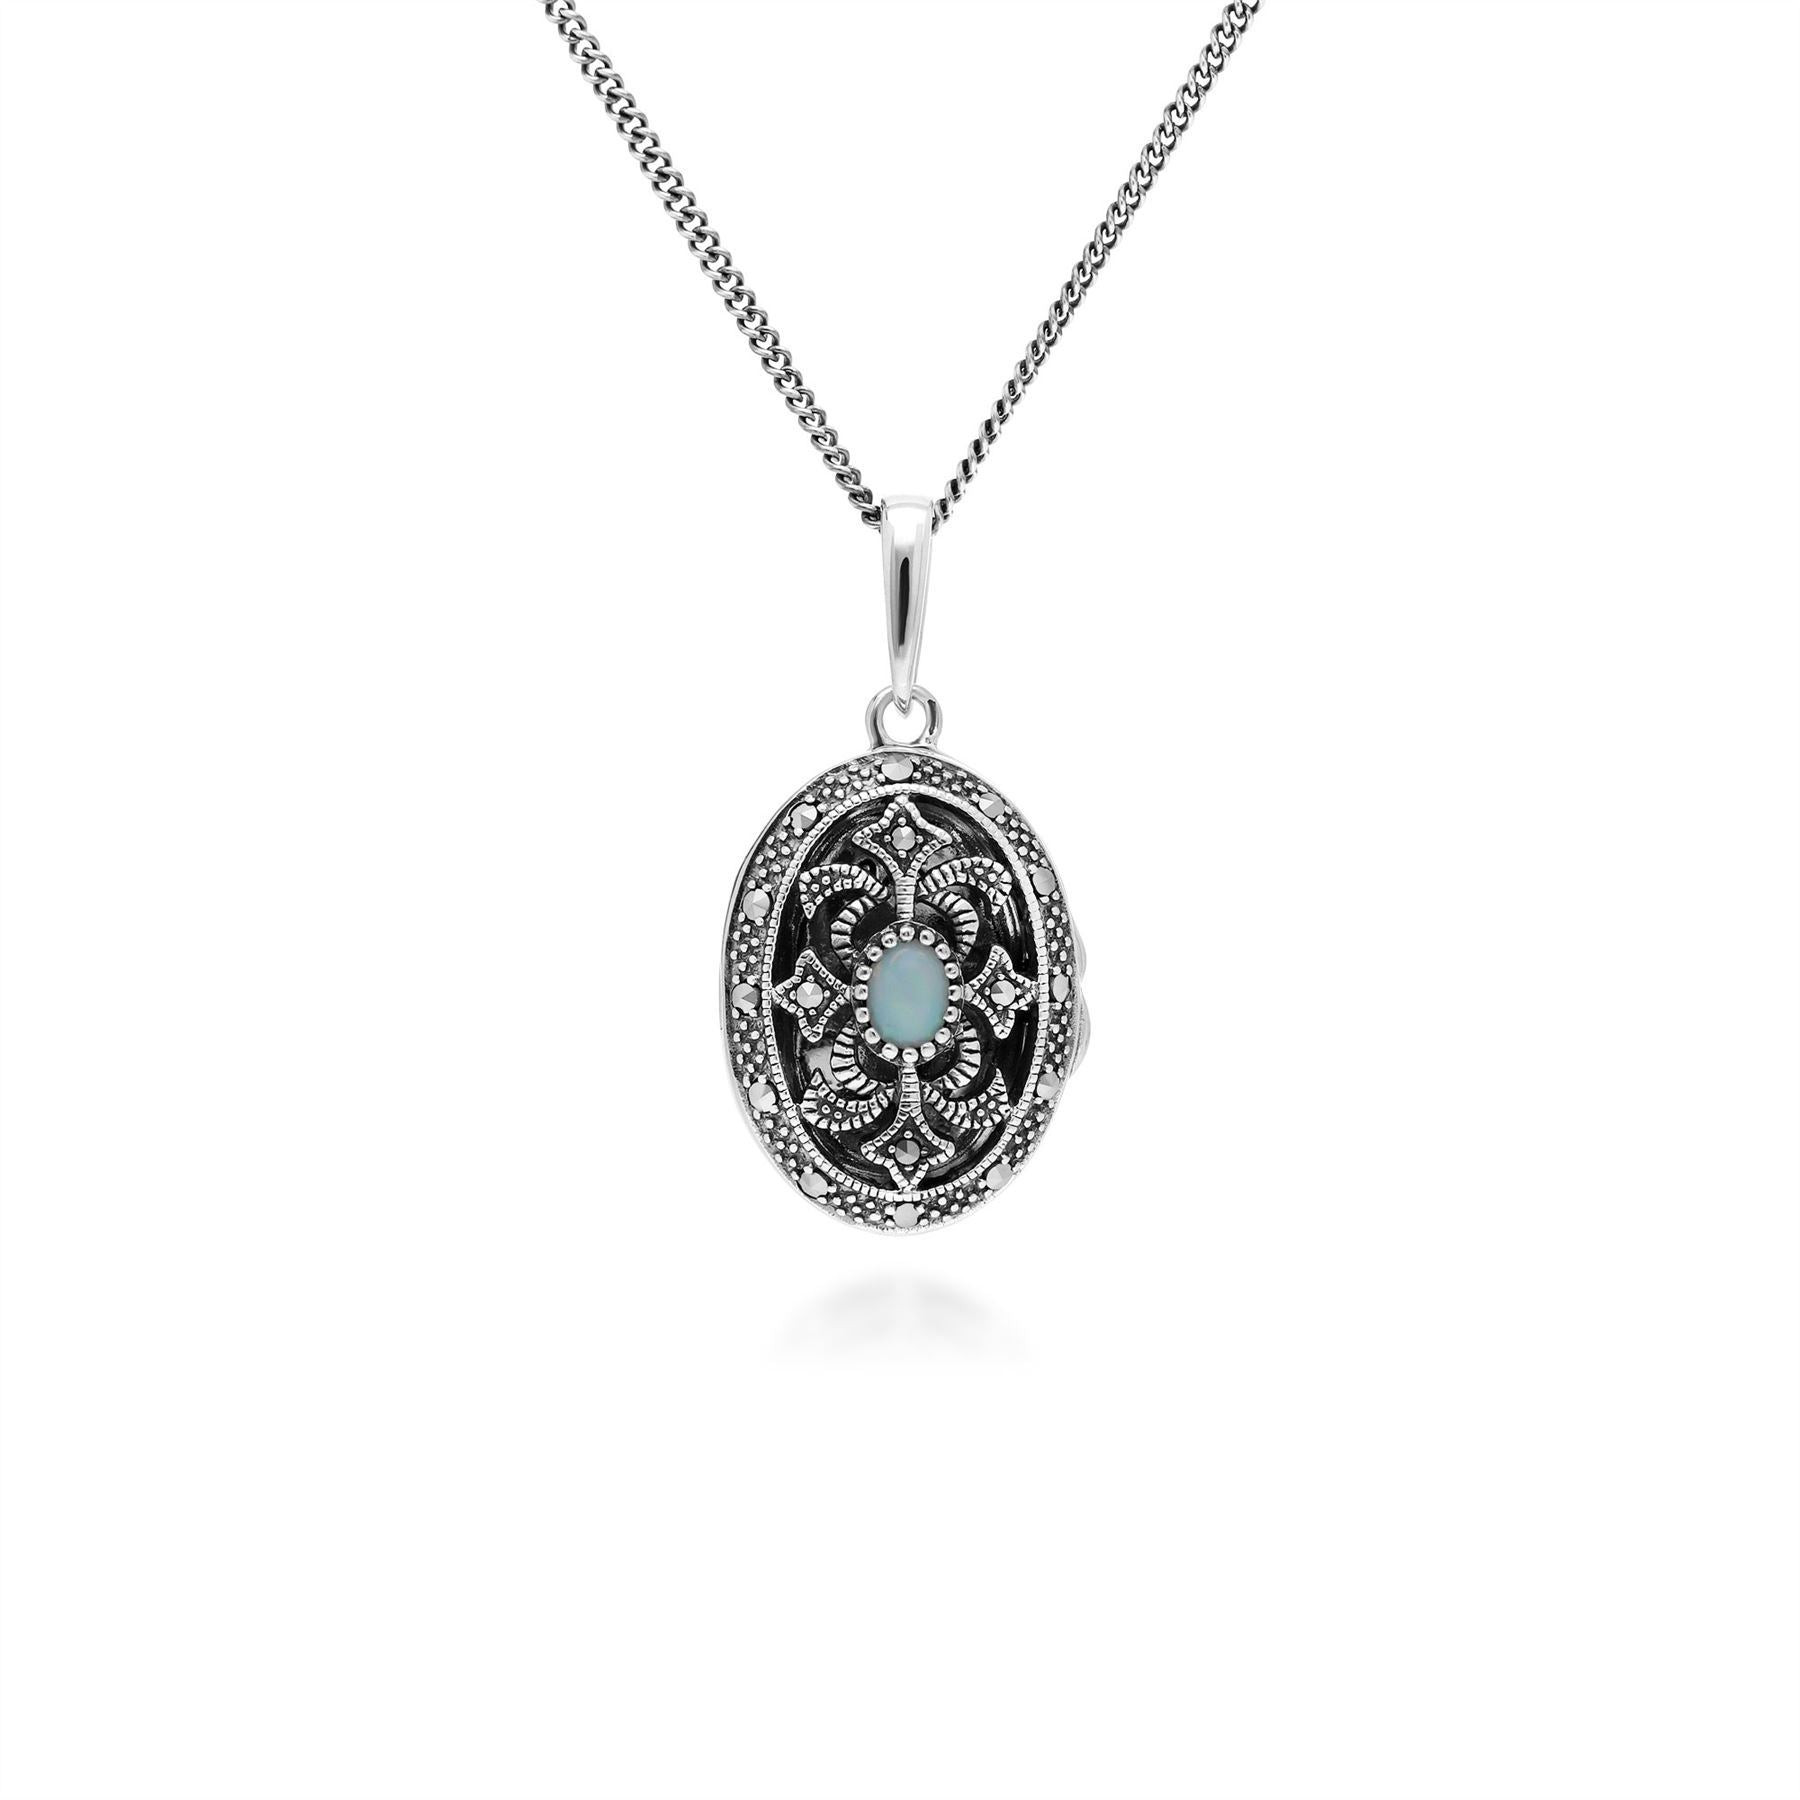 Art Nouveau Style Oval Opal & Marcasite Locket Necklace in 925 Sterling Silver